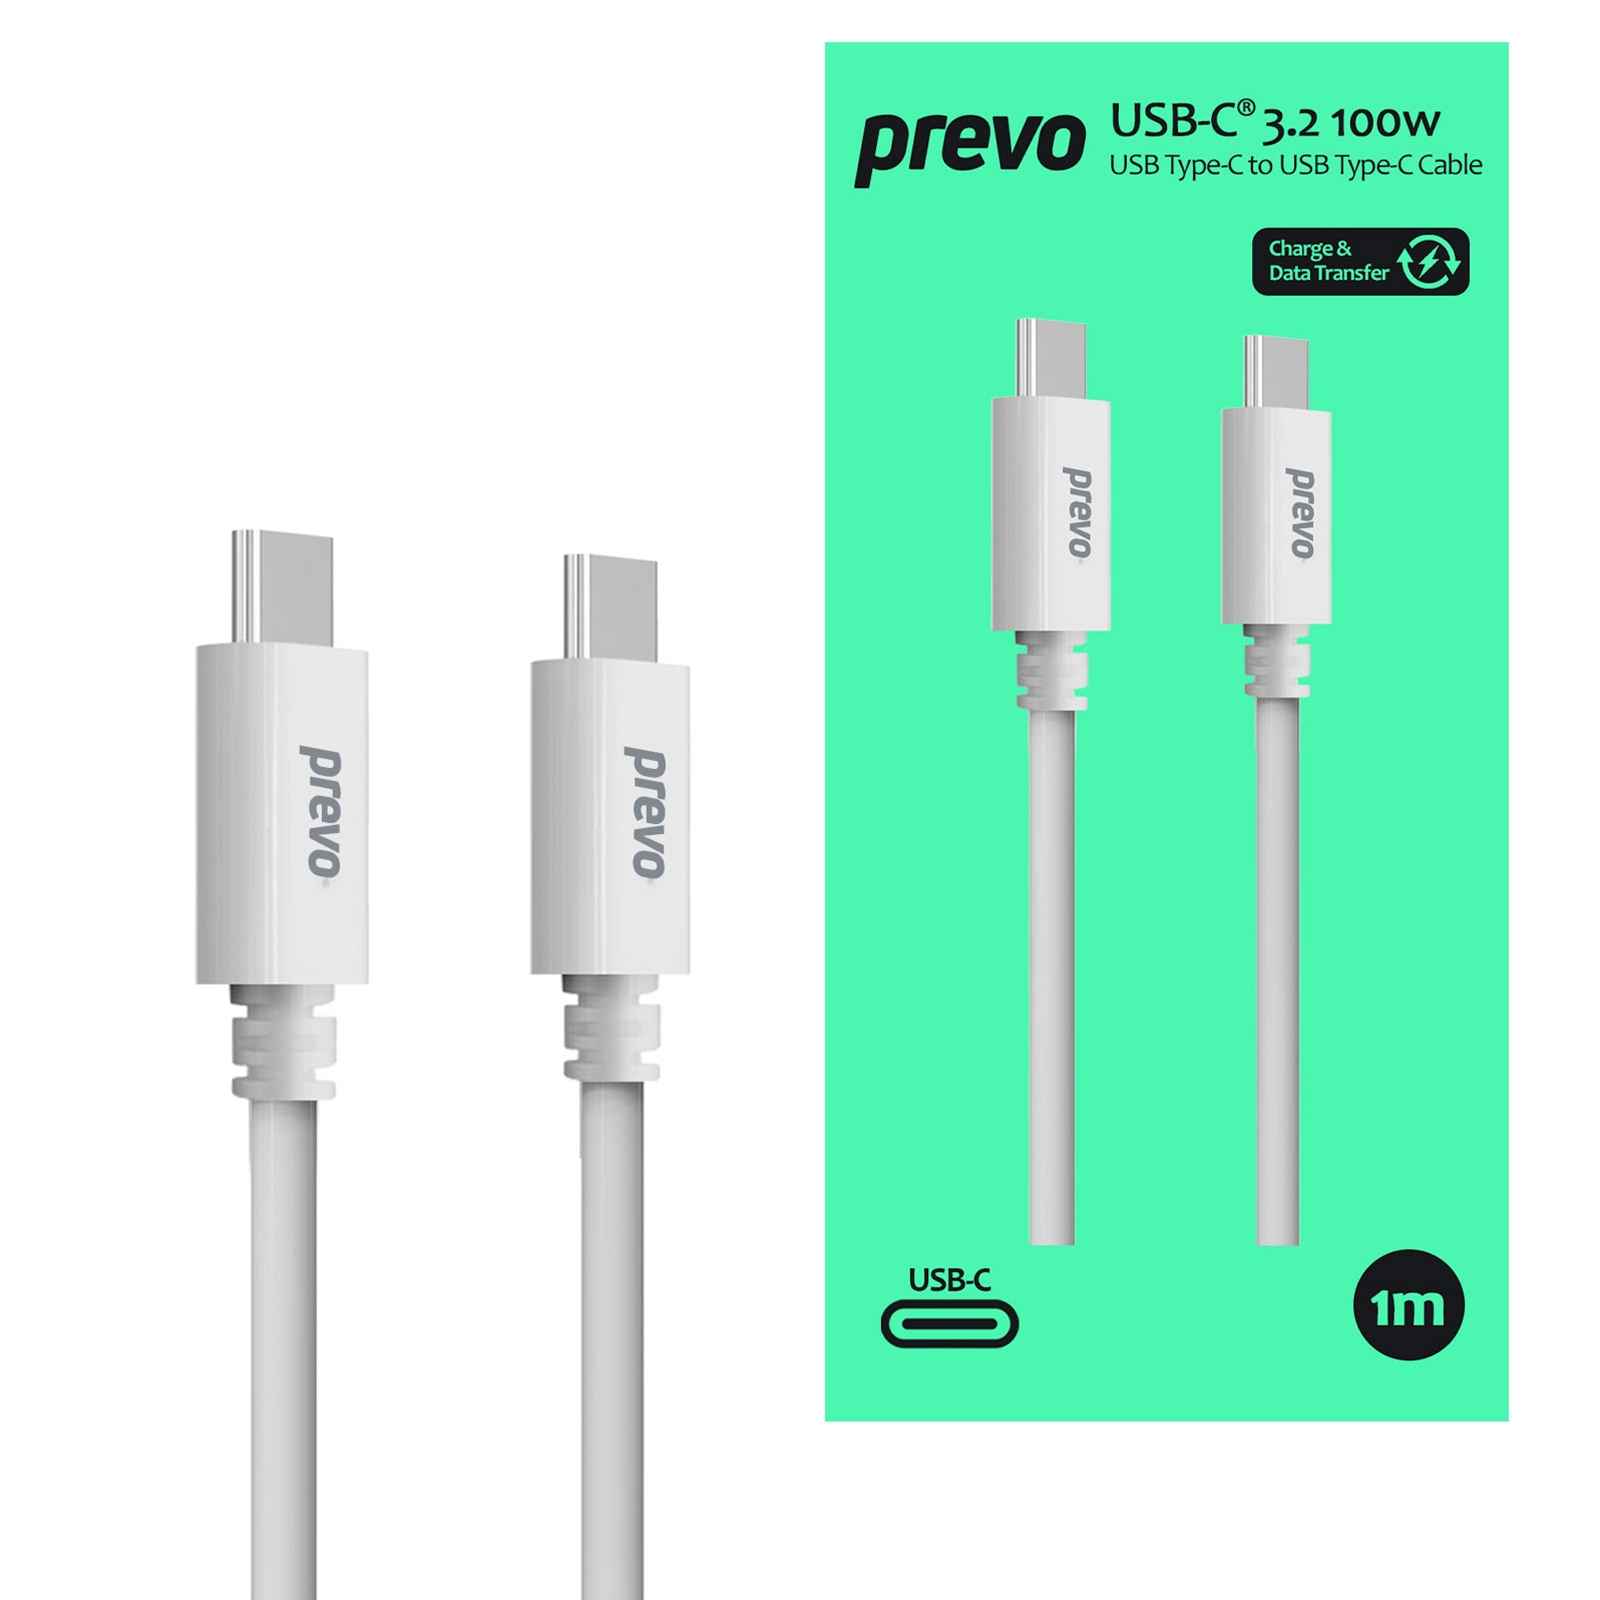 Prevo USB 3.2 100W C to C cable, 20V/5A, 10GB/20GB/s, Injection molding +TPE+ C TID certification,Black, Superior Design & Perfornance, Retail Box Packaging